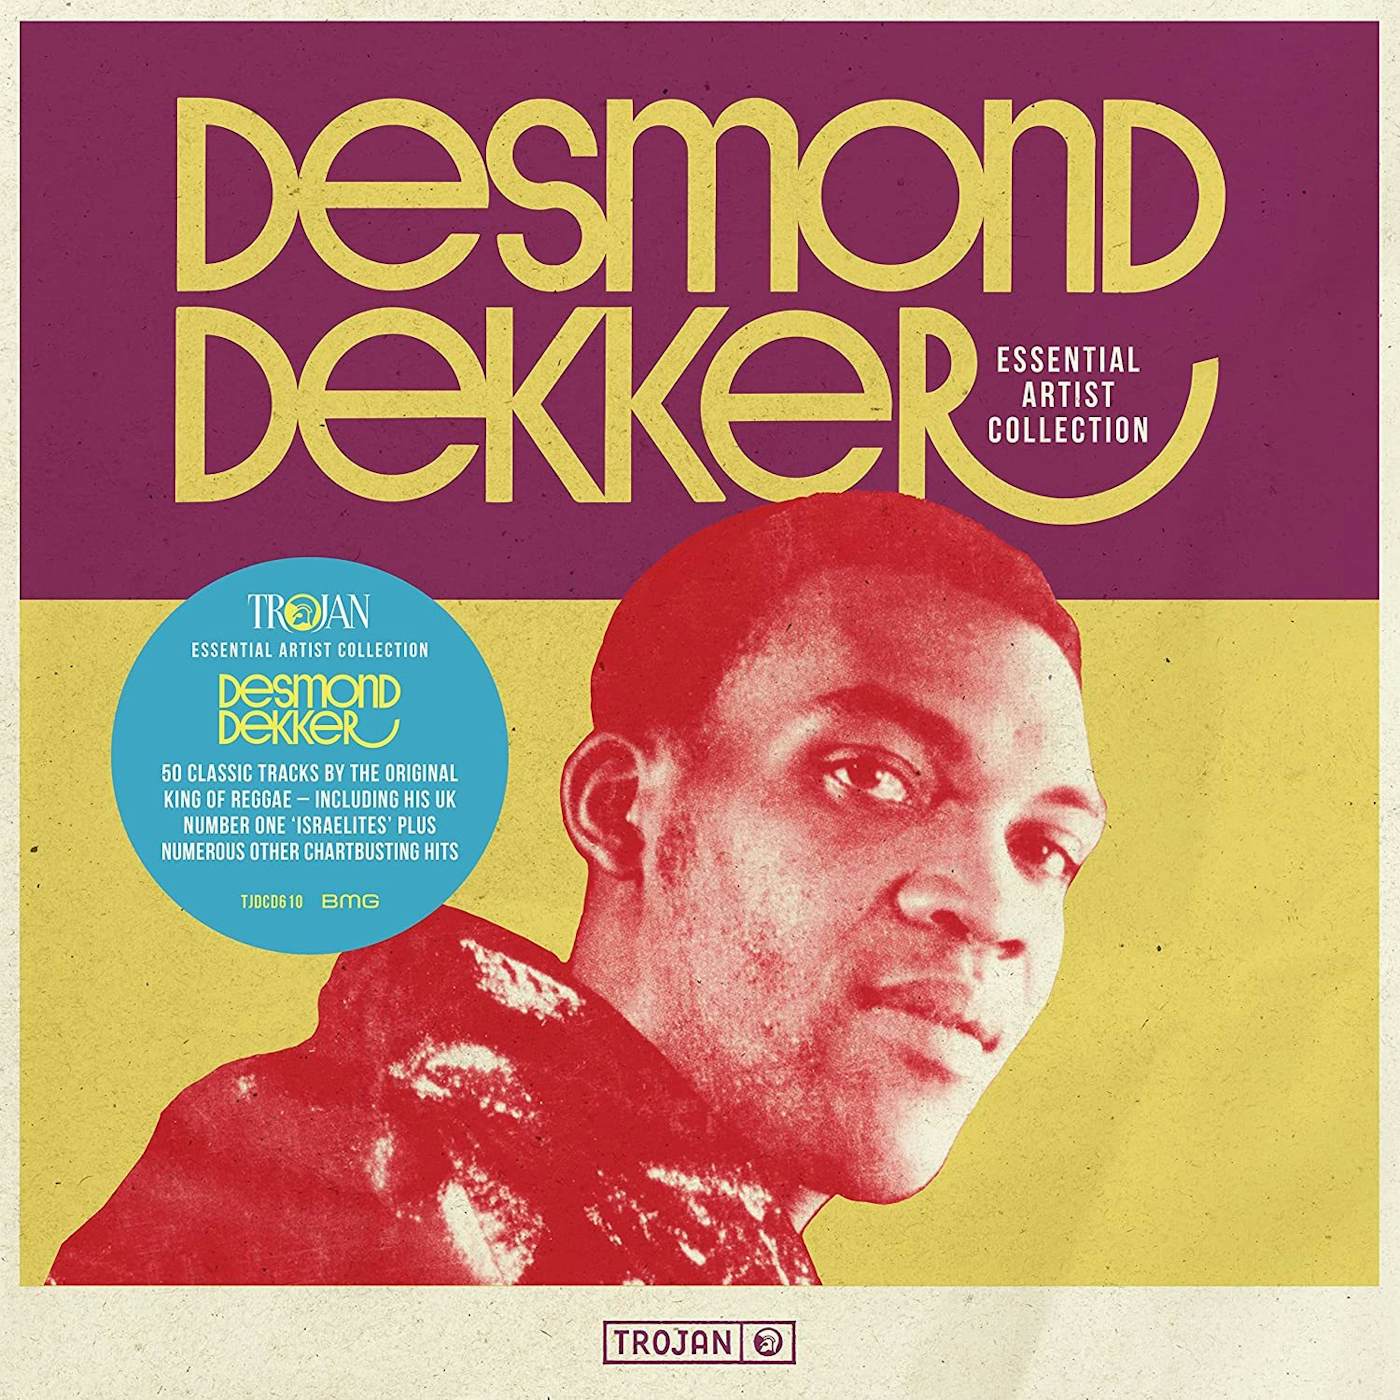 Desmond Dekker Essential Artist Collection CD